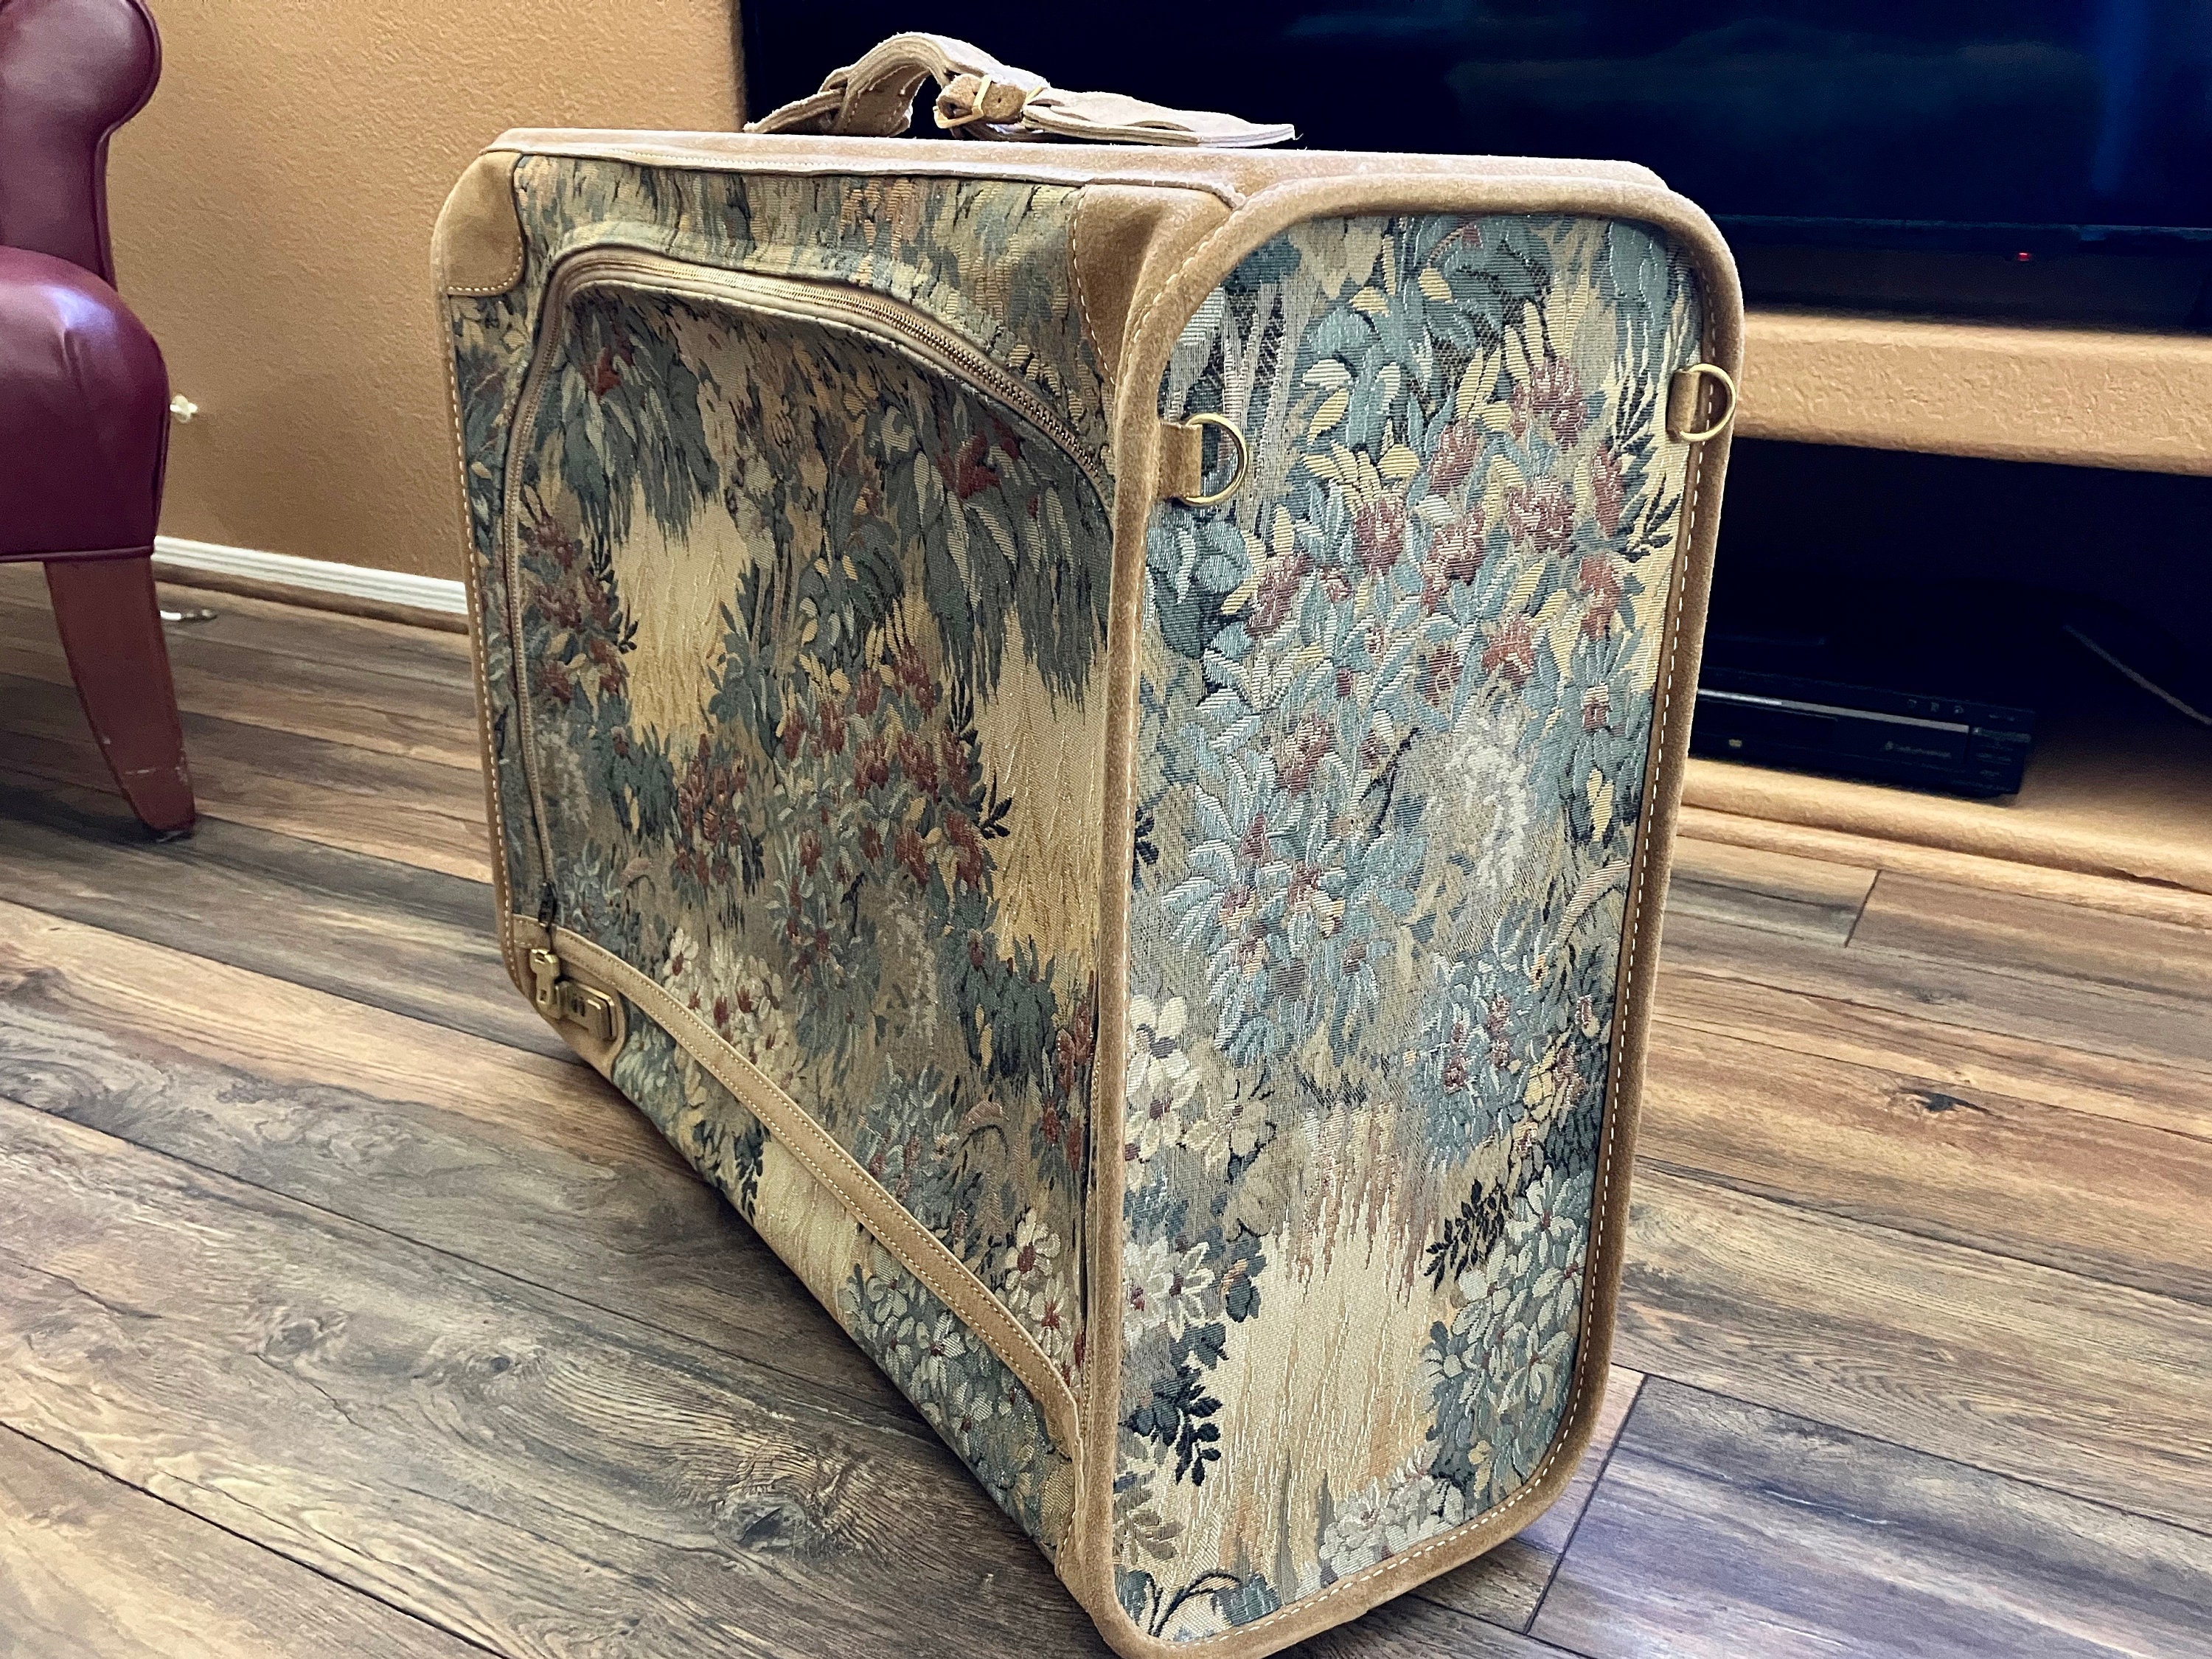 Vintage french luggage co - Gem